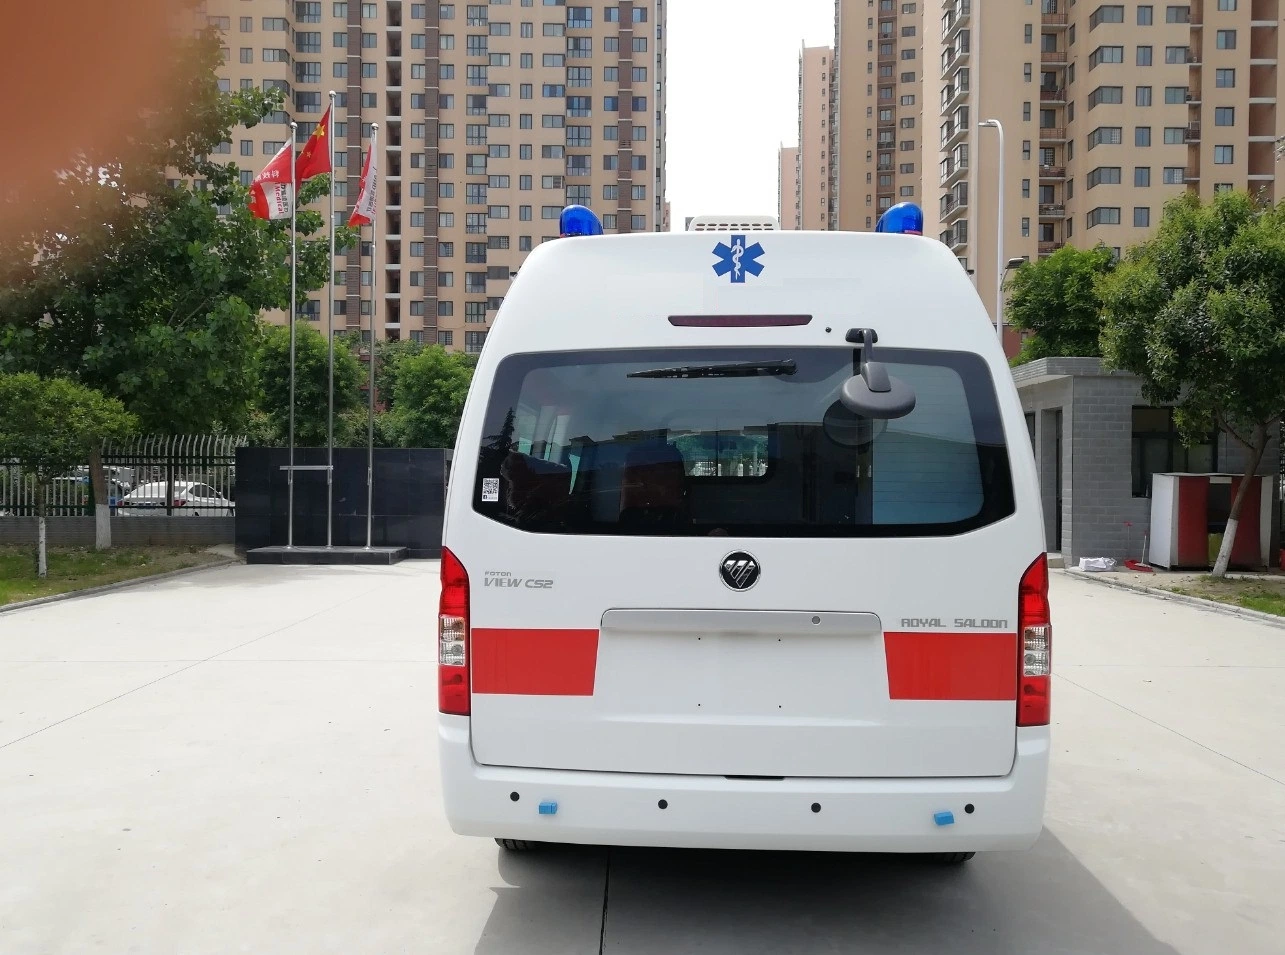 Automatic ICU Hospital Patient Transport Medical Rescue Ambulance